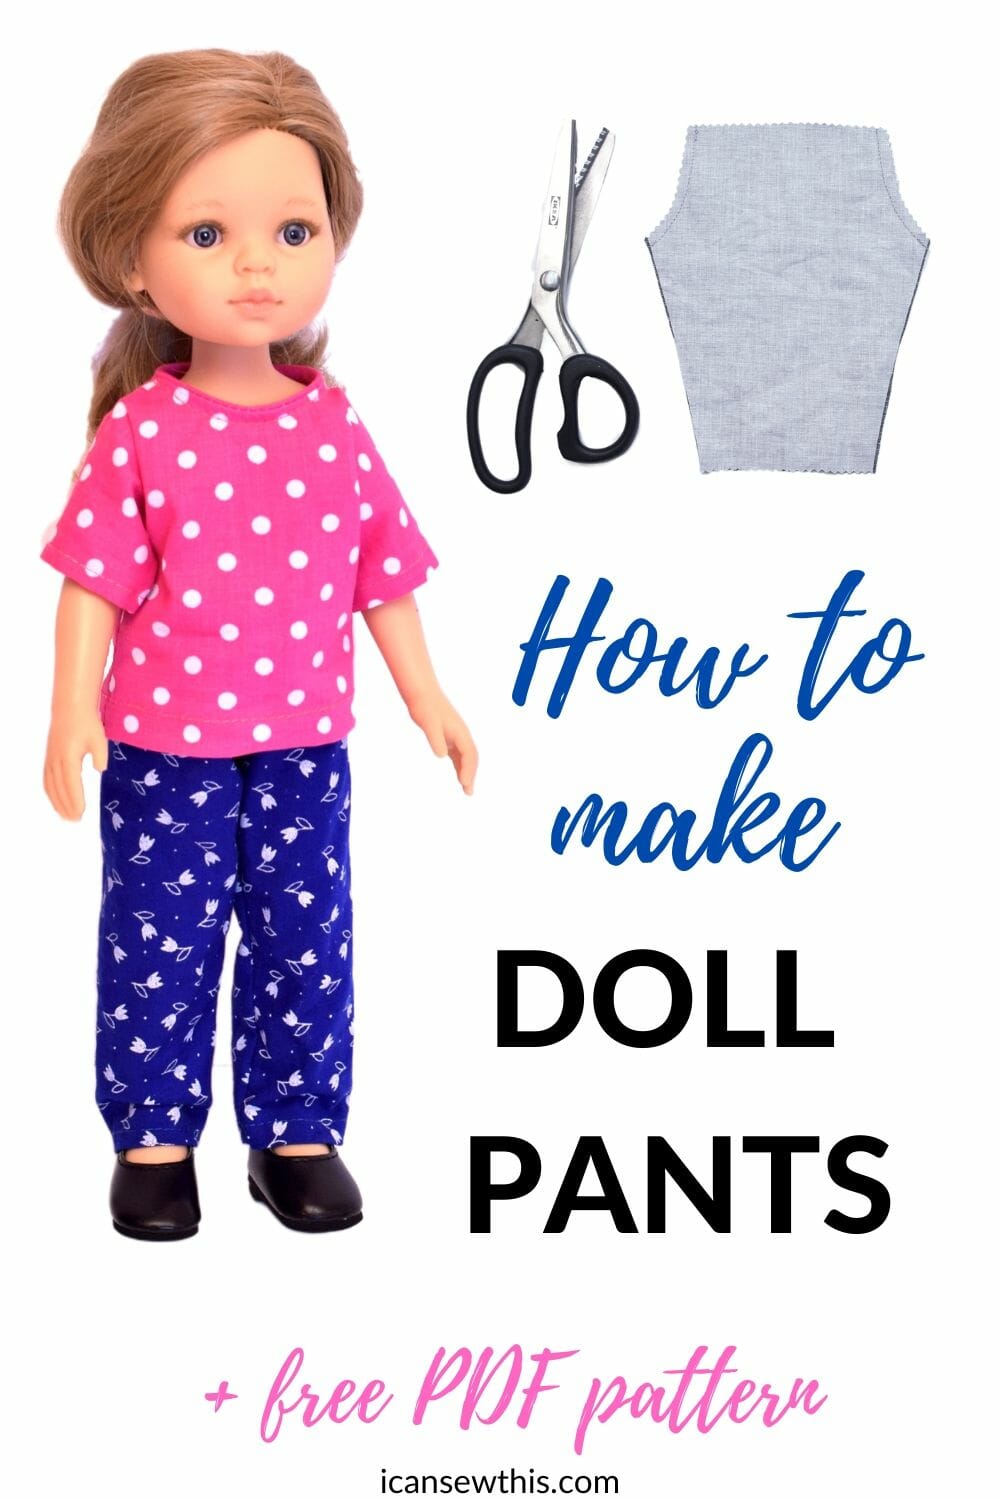 How to make doll pants (+free PDF pattern)